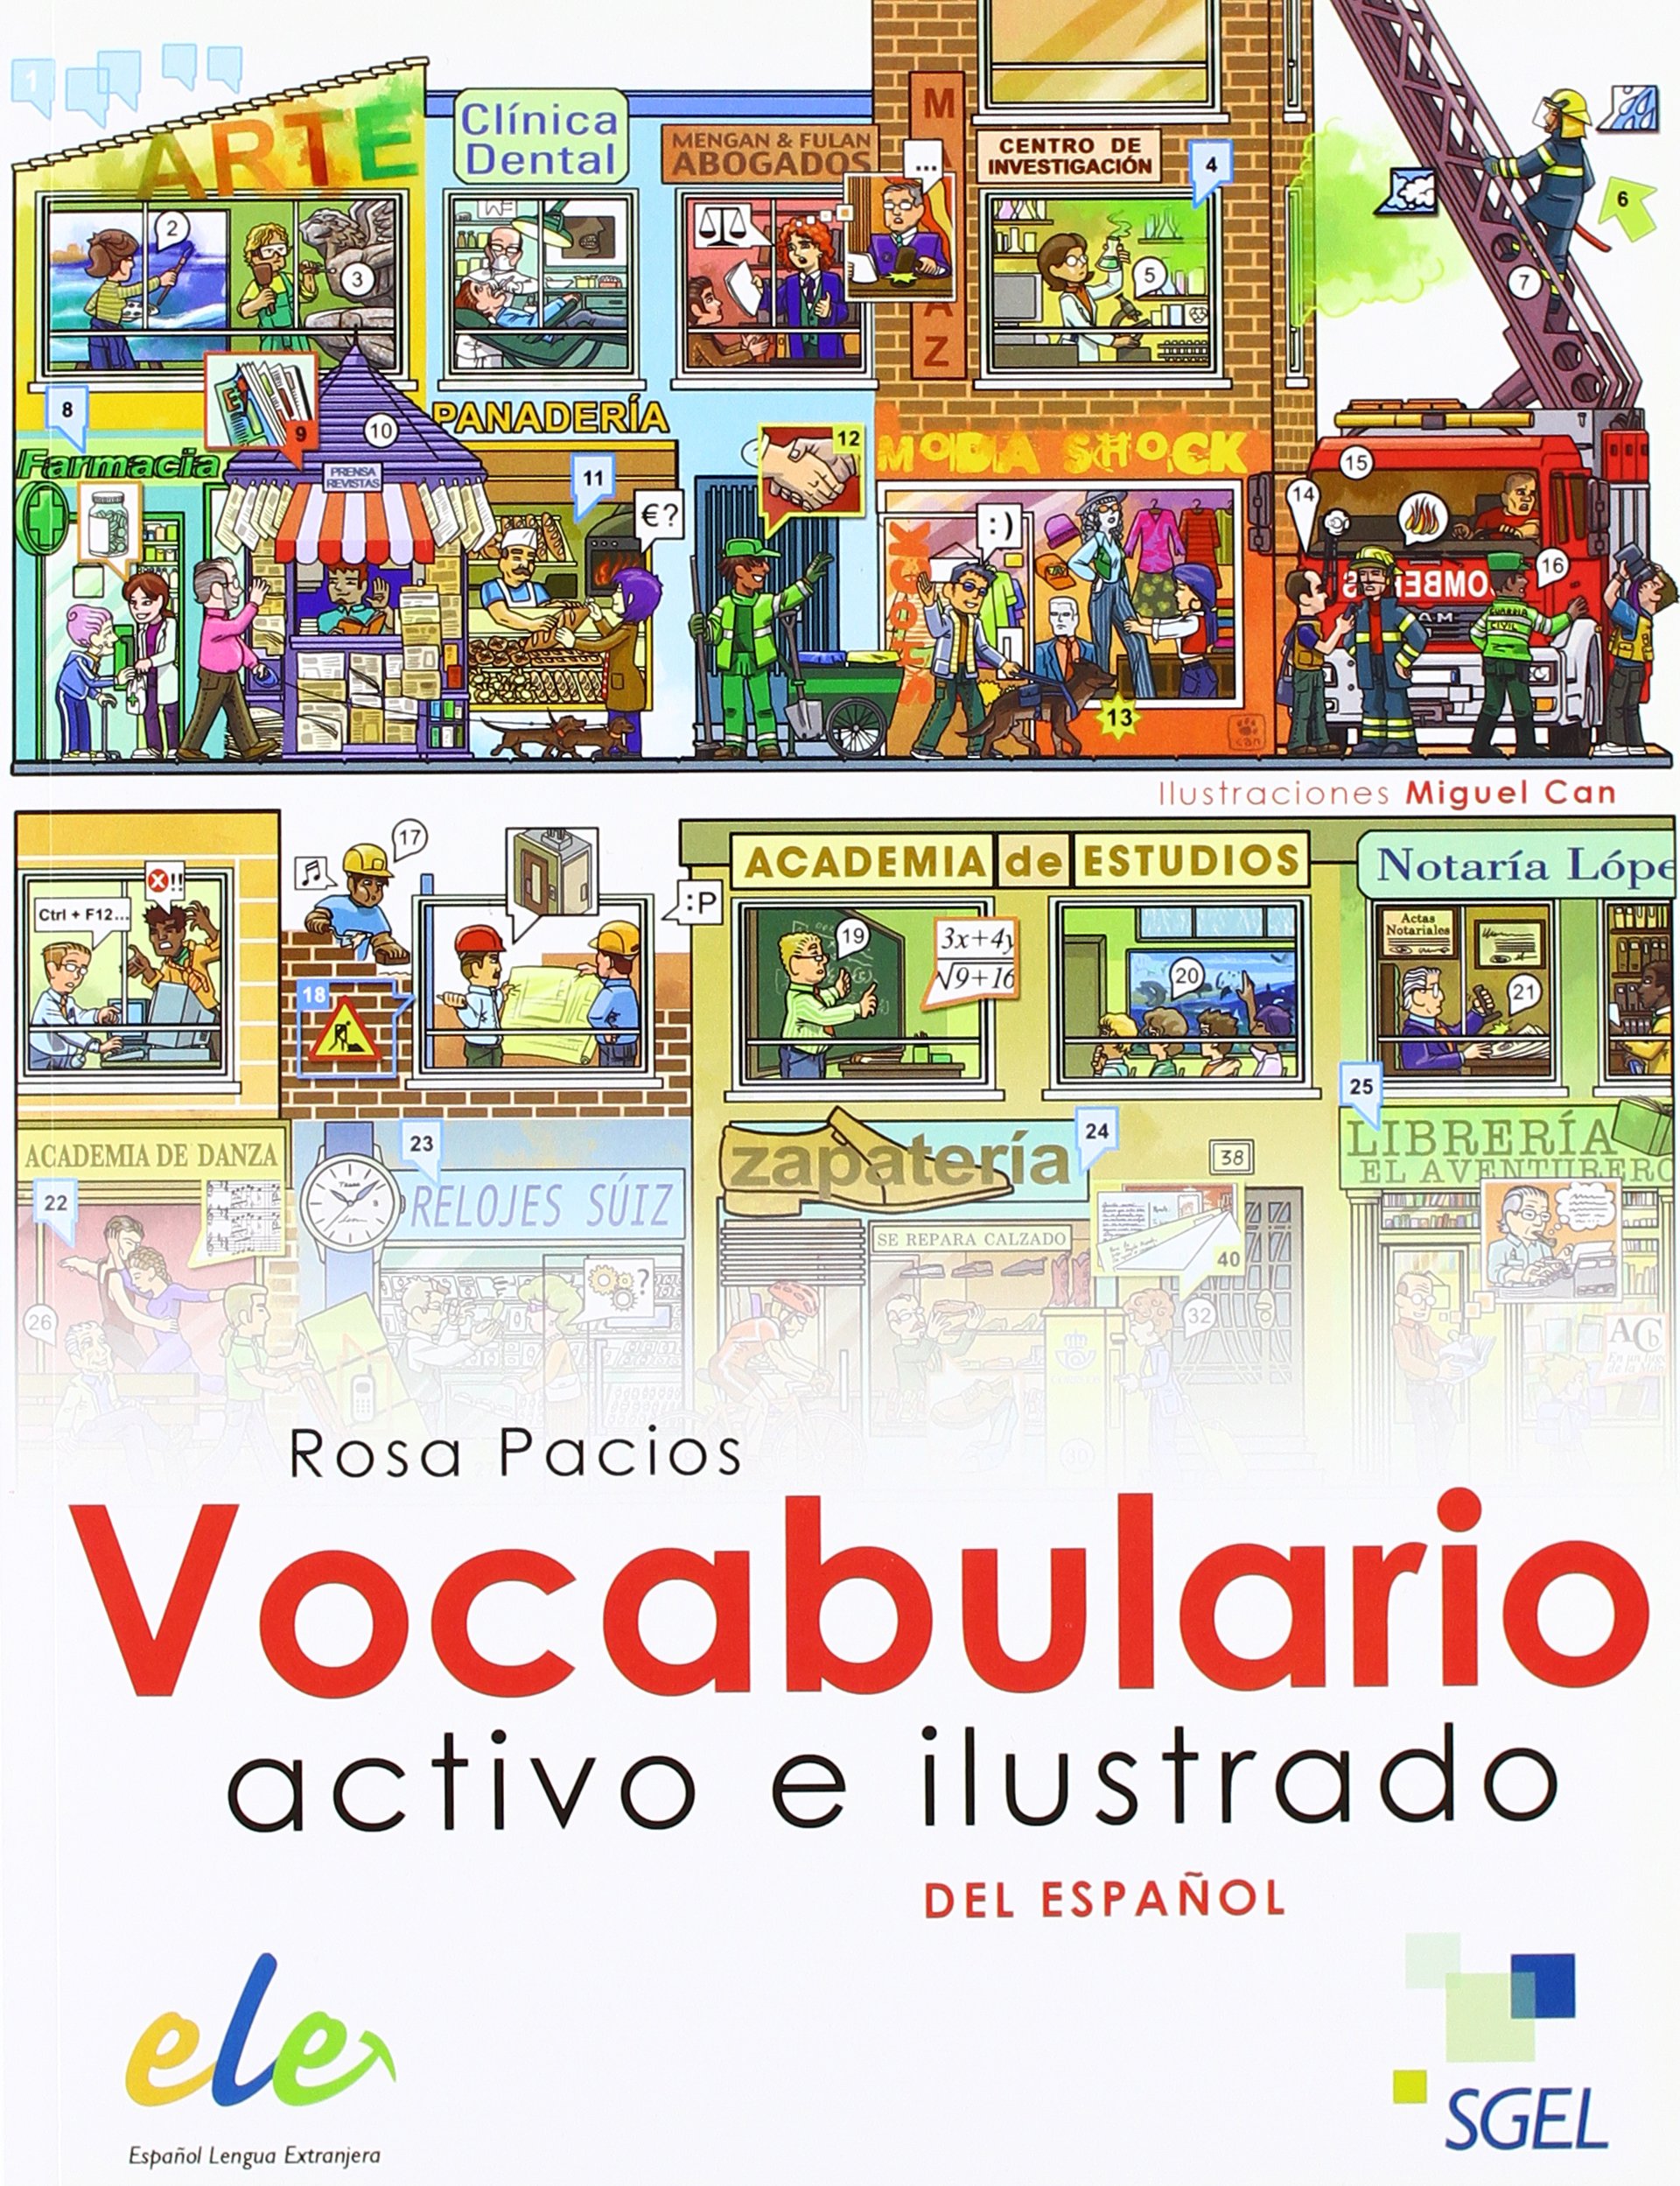 Vocabulario activo e ilustrado del espanol / Словарь